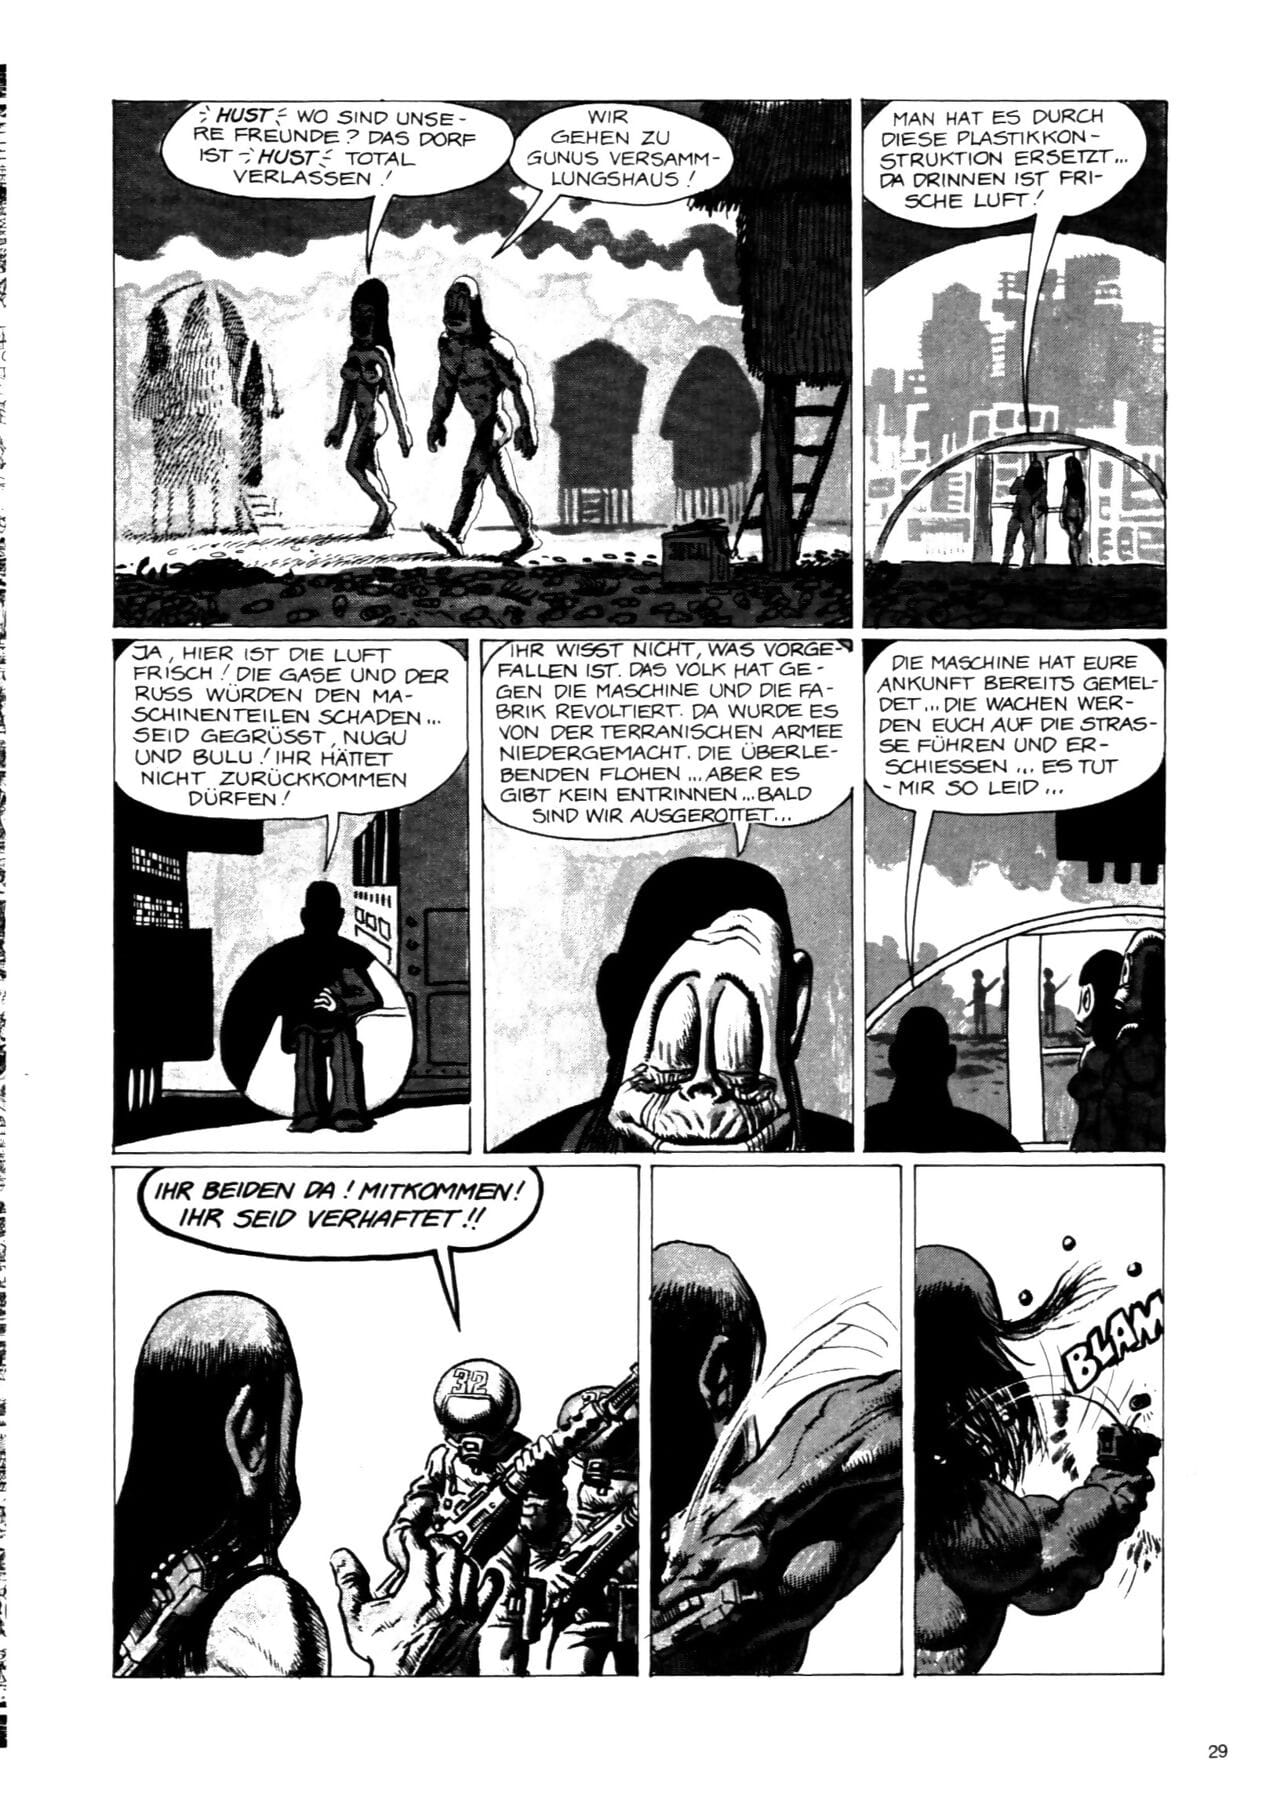 schwermetall #054 Teil 2 page 1